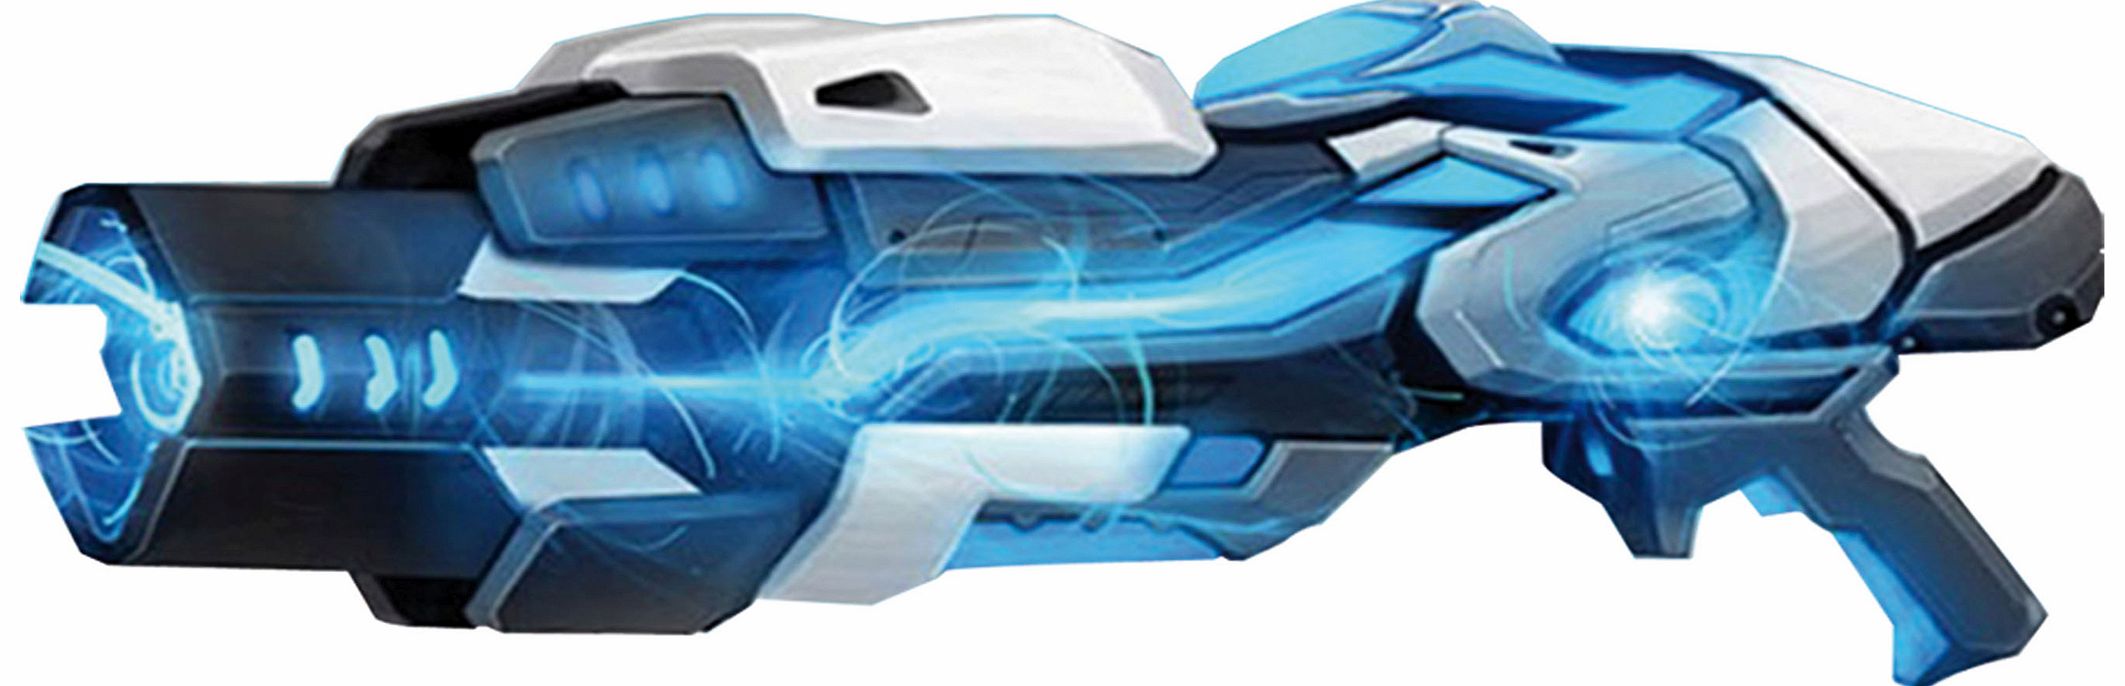 IMC Toys Max Steel Turbo Blaster